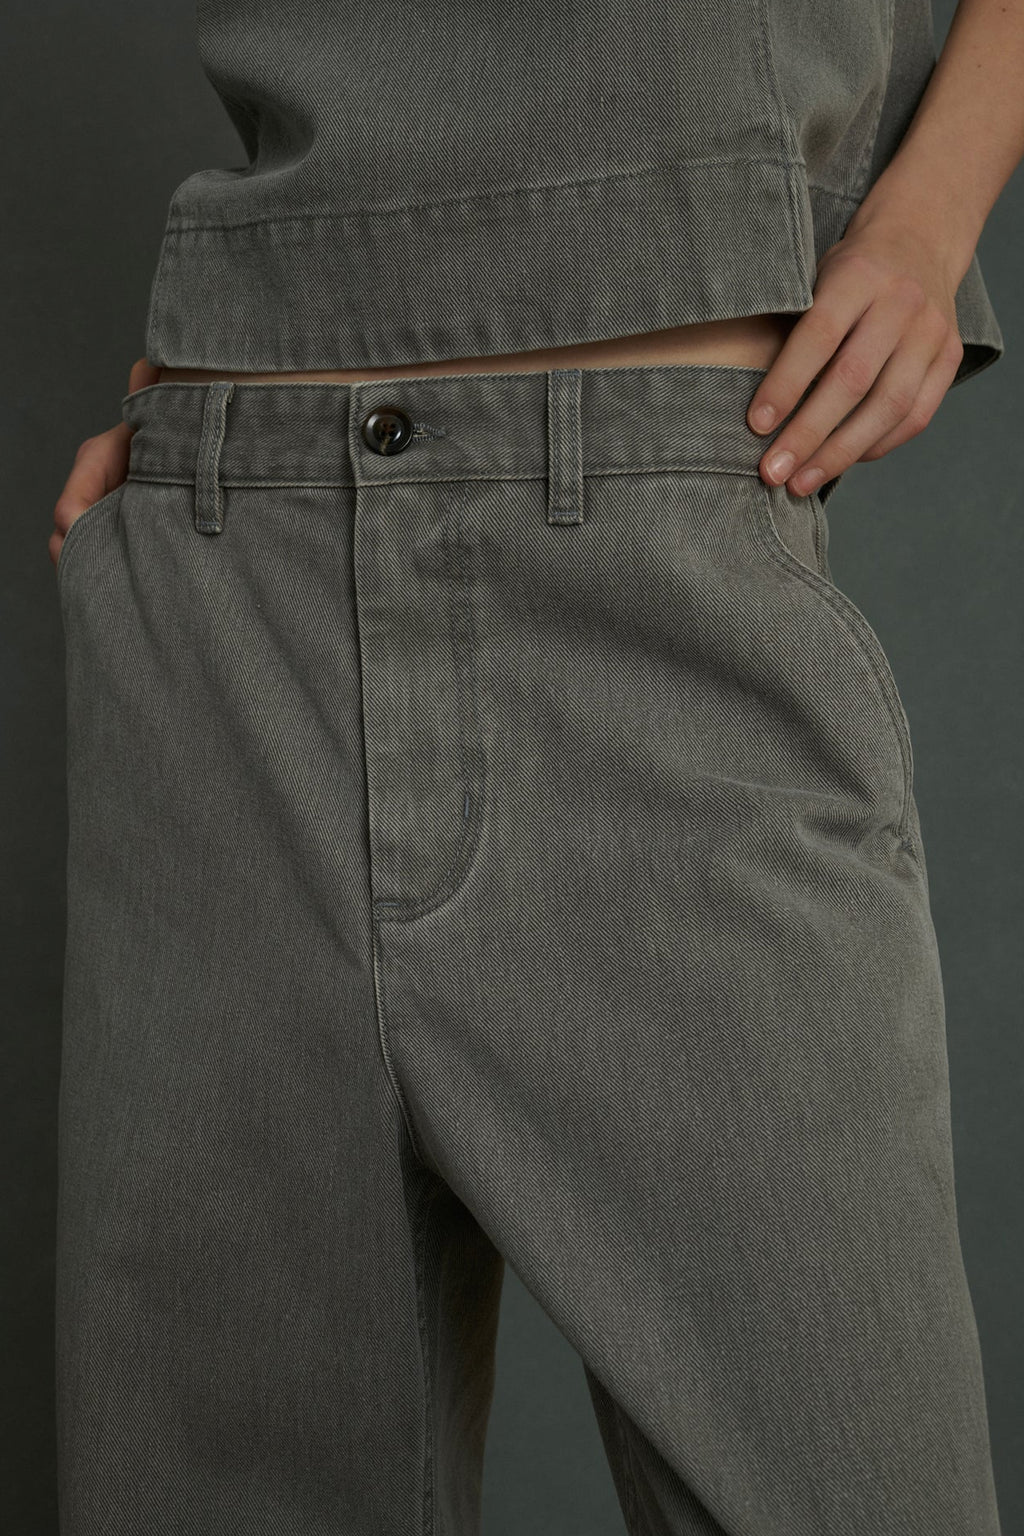 SOEUR Alissio Grey Jeans - The Mercantile London